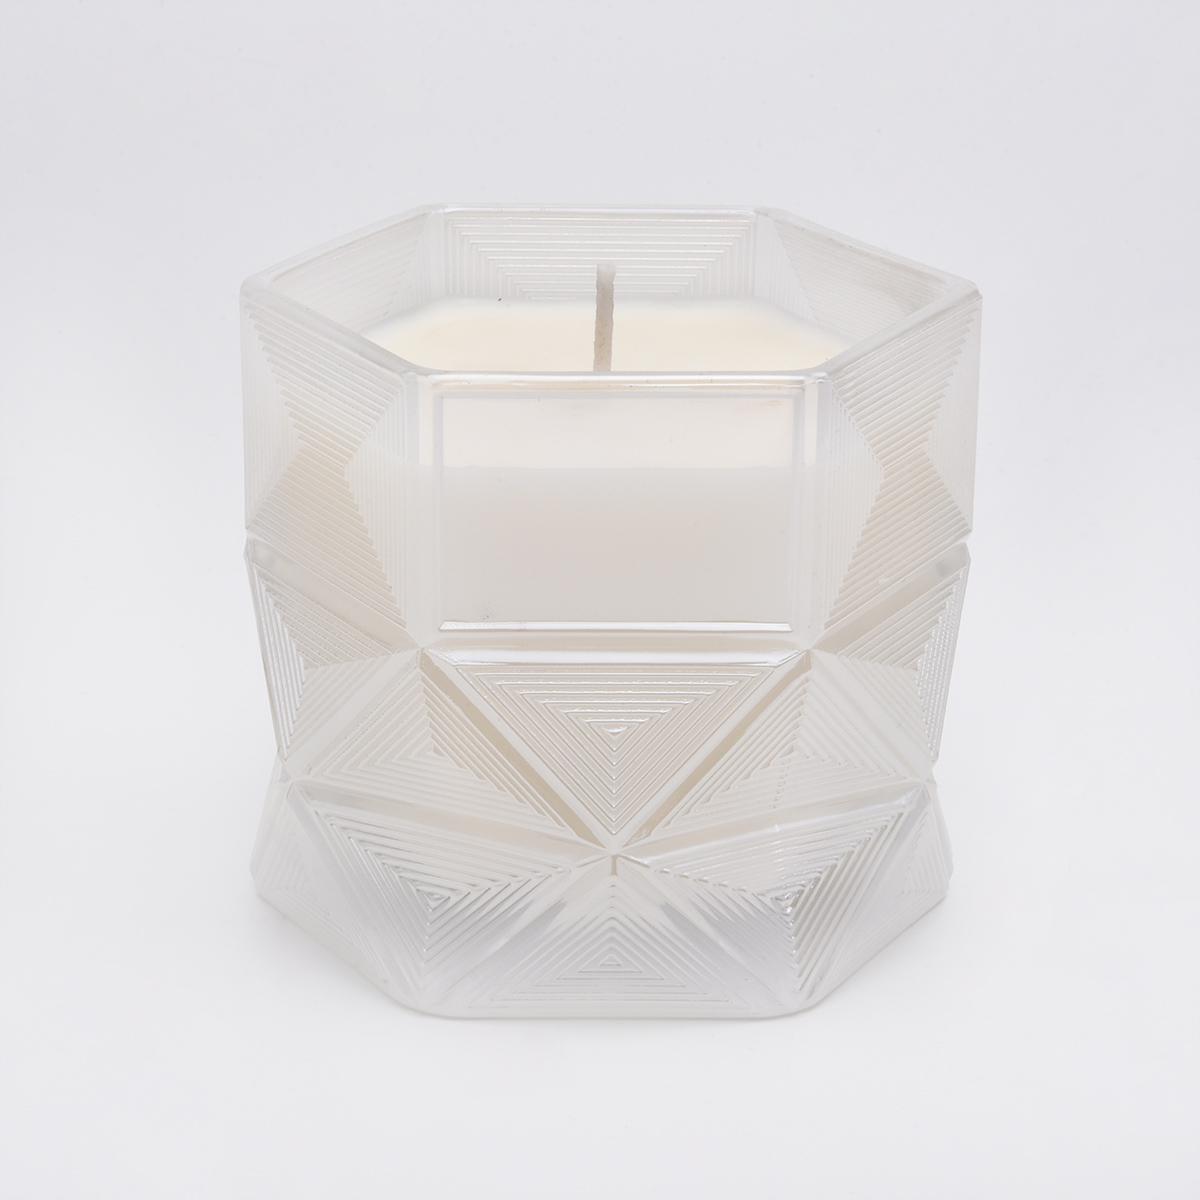 Sunny own design hexagon glass candle jar